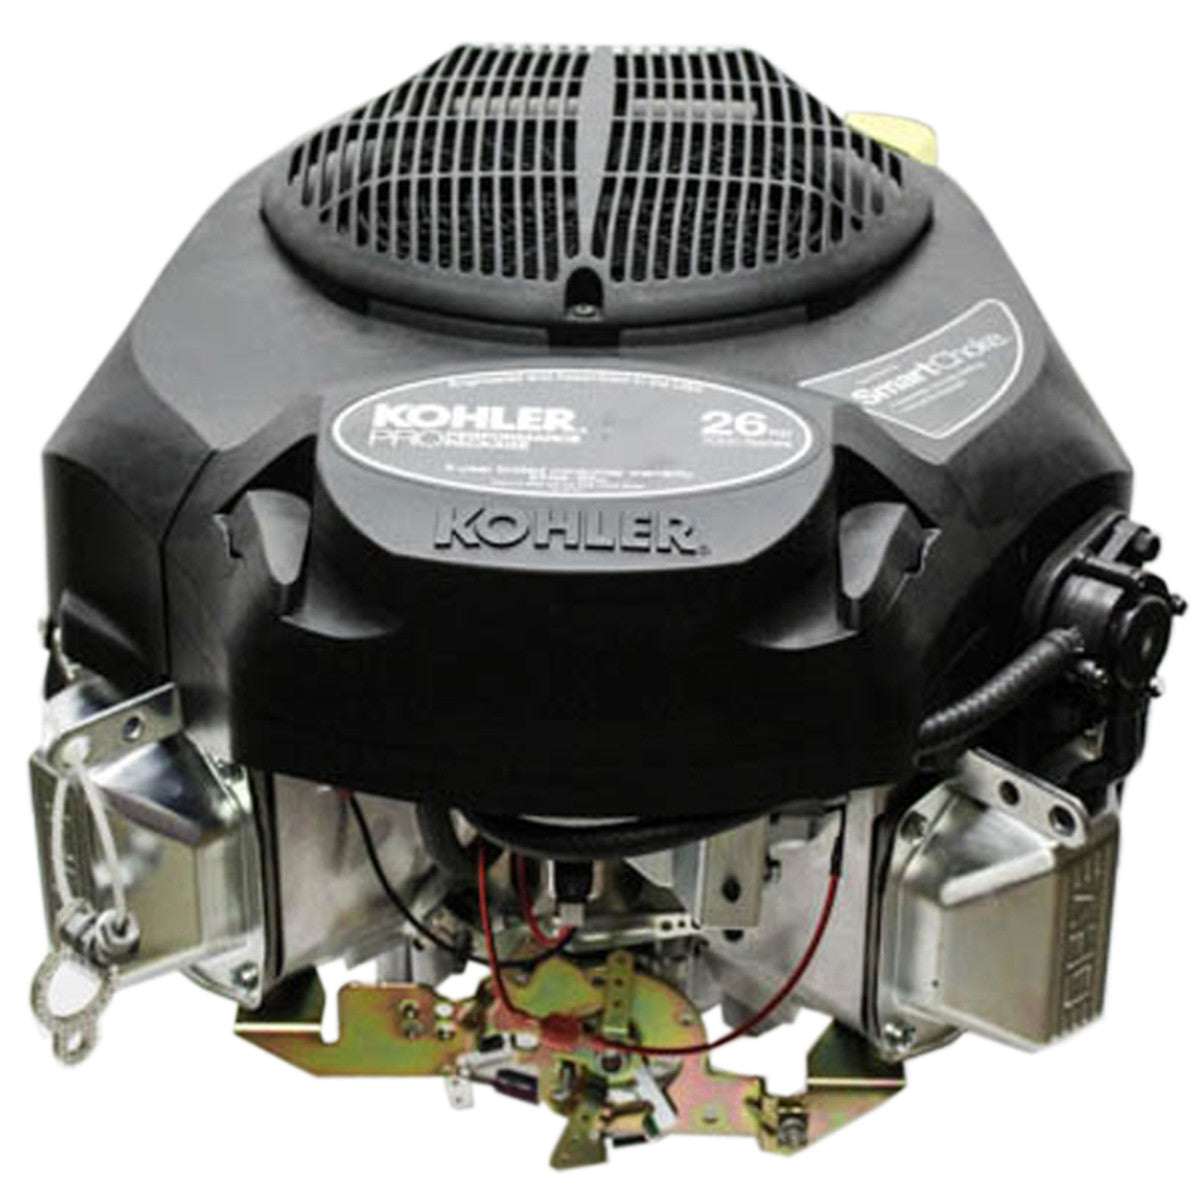 Kohler 7000 Series 26HP Replacement Engine #KT745-3056